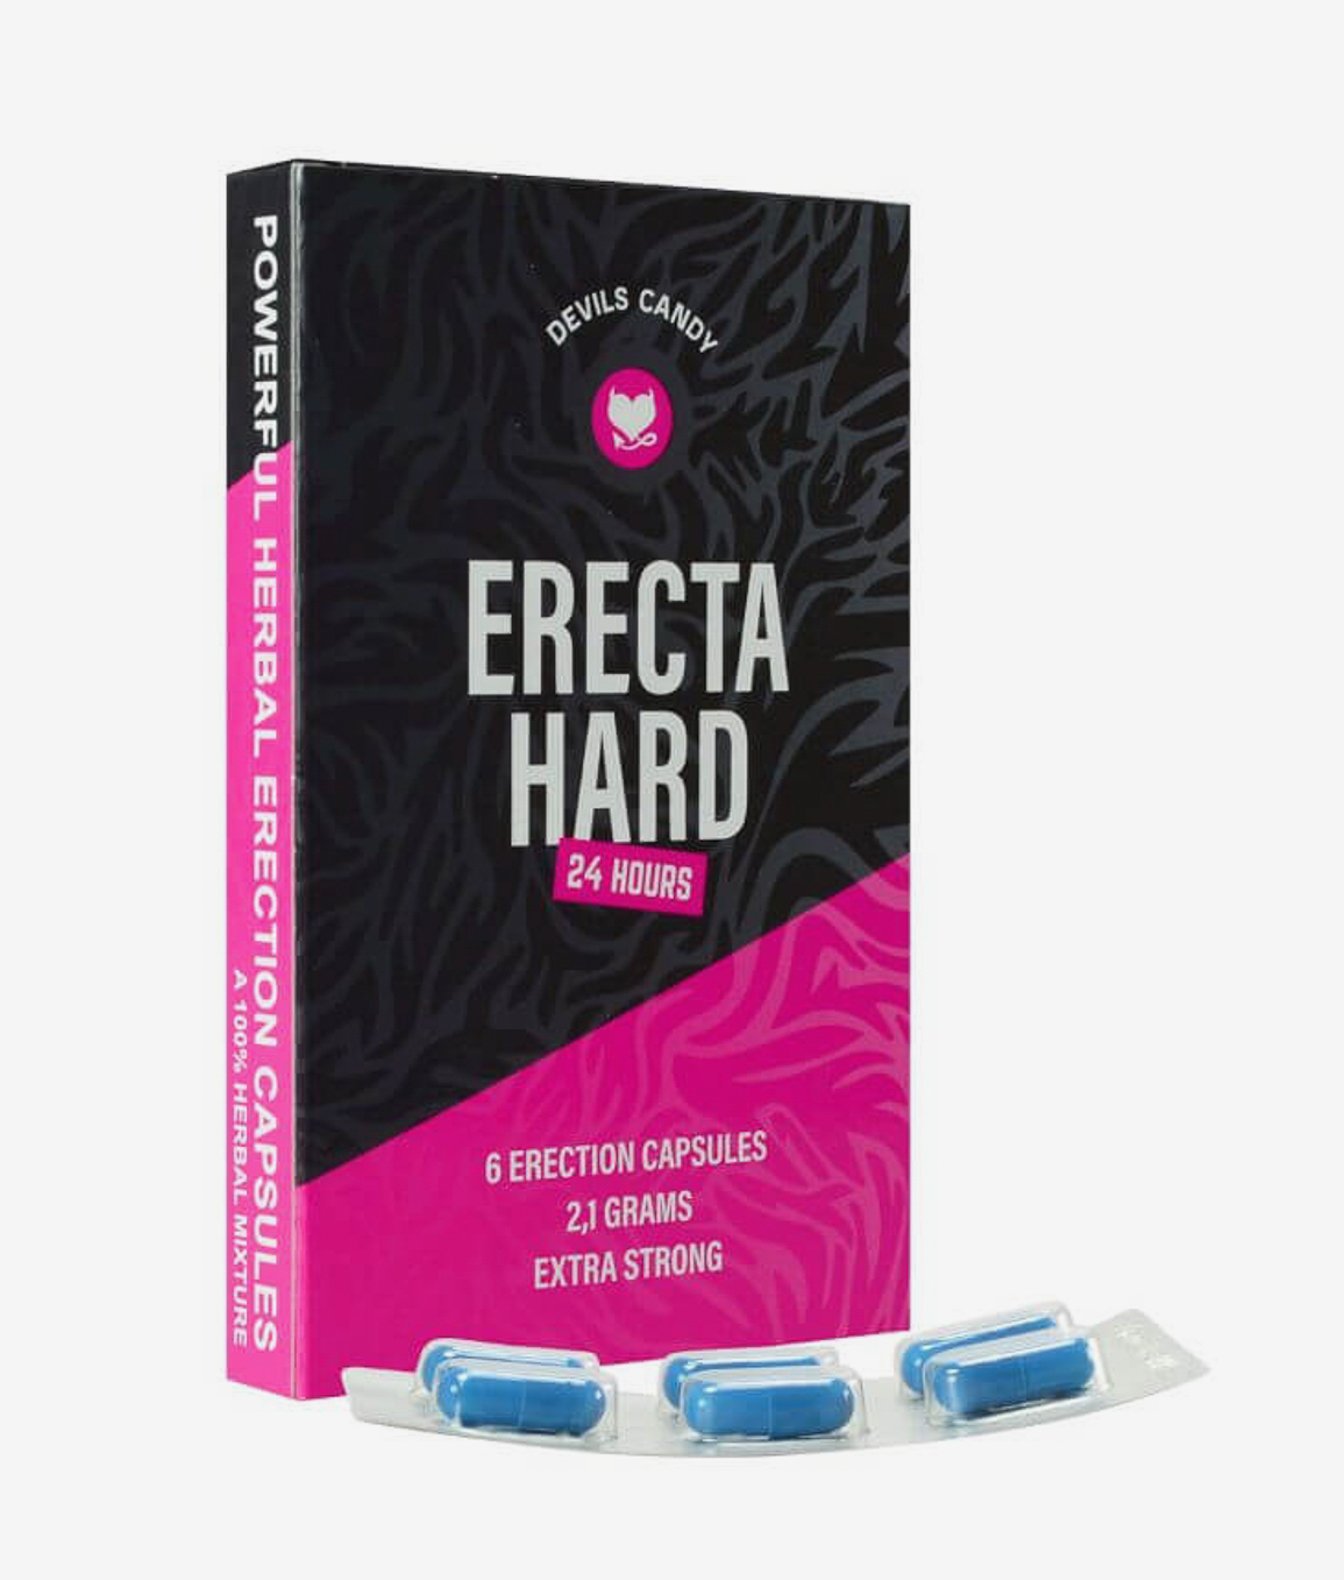 Devils Candy Erecta Hard tabletki wzmacniające erekcję